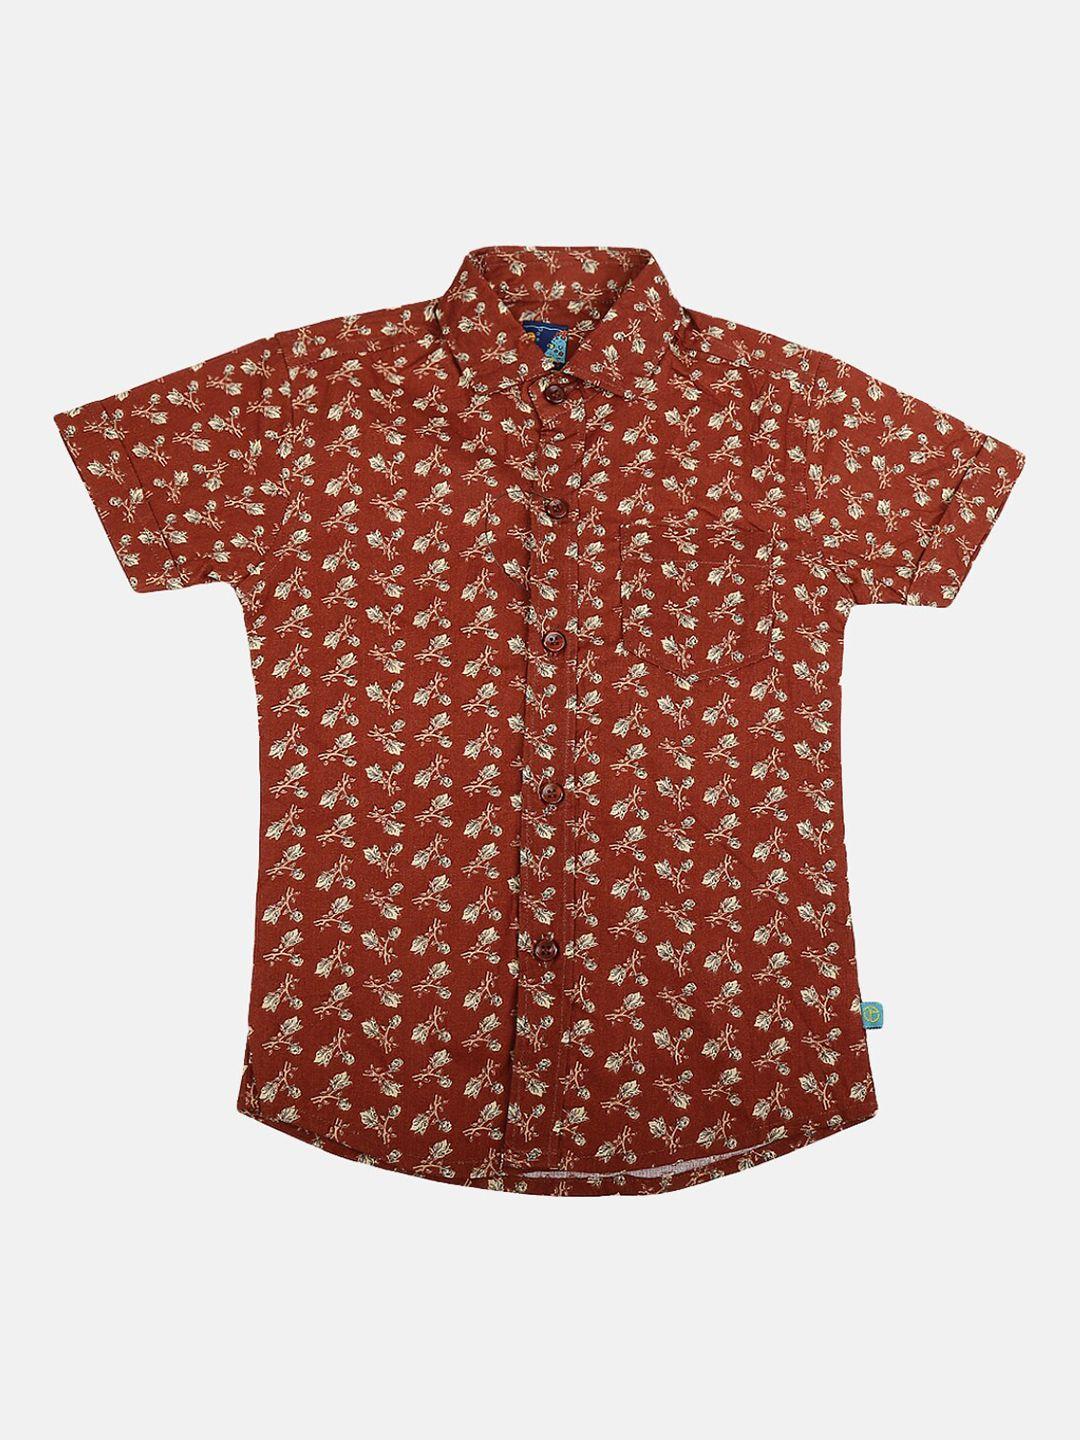 v-mart boys brown floral printed casual shirt